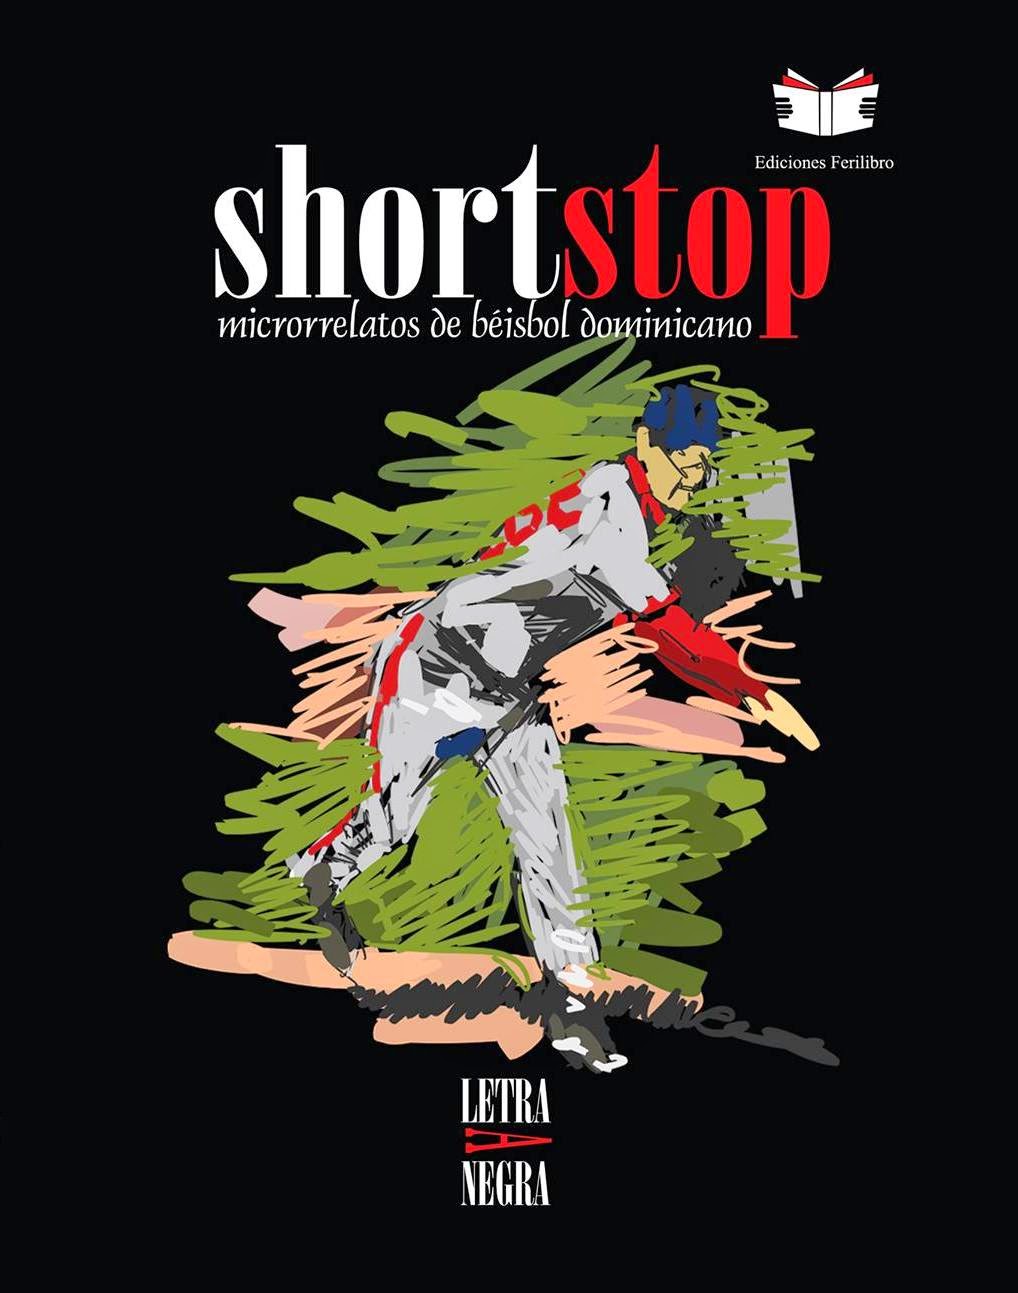 Shortstop (microrrelatos de béisbol dominicano)